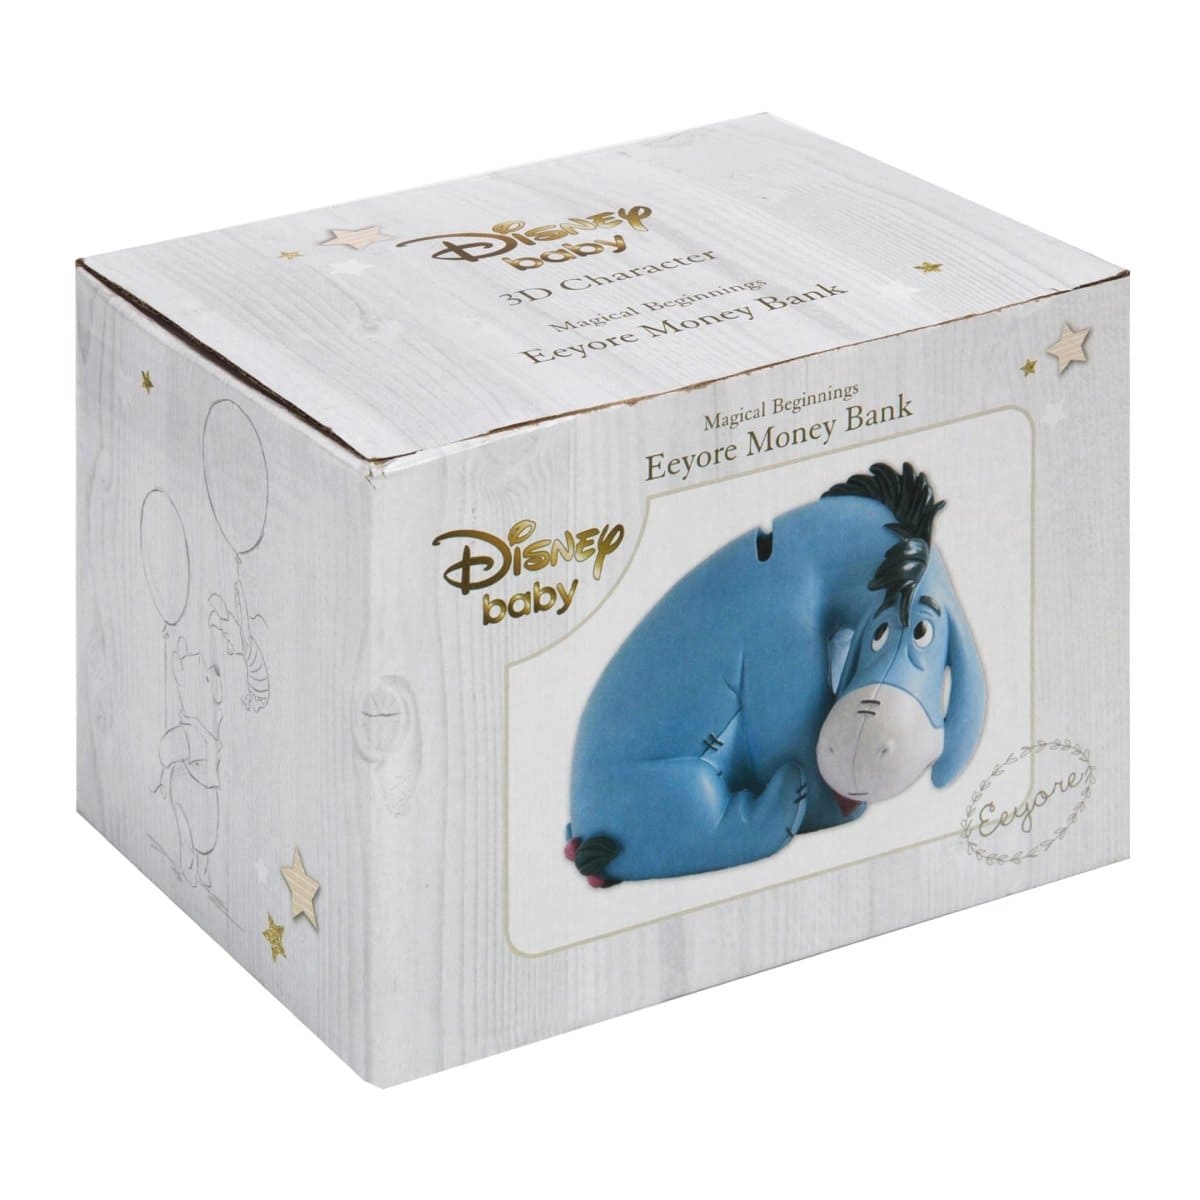 Disney Eeyore Magical Beginnings Money Box - Money Box by Disney